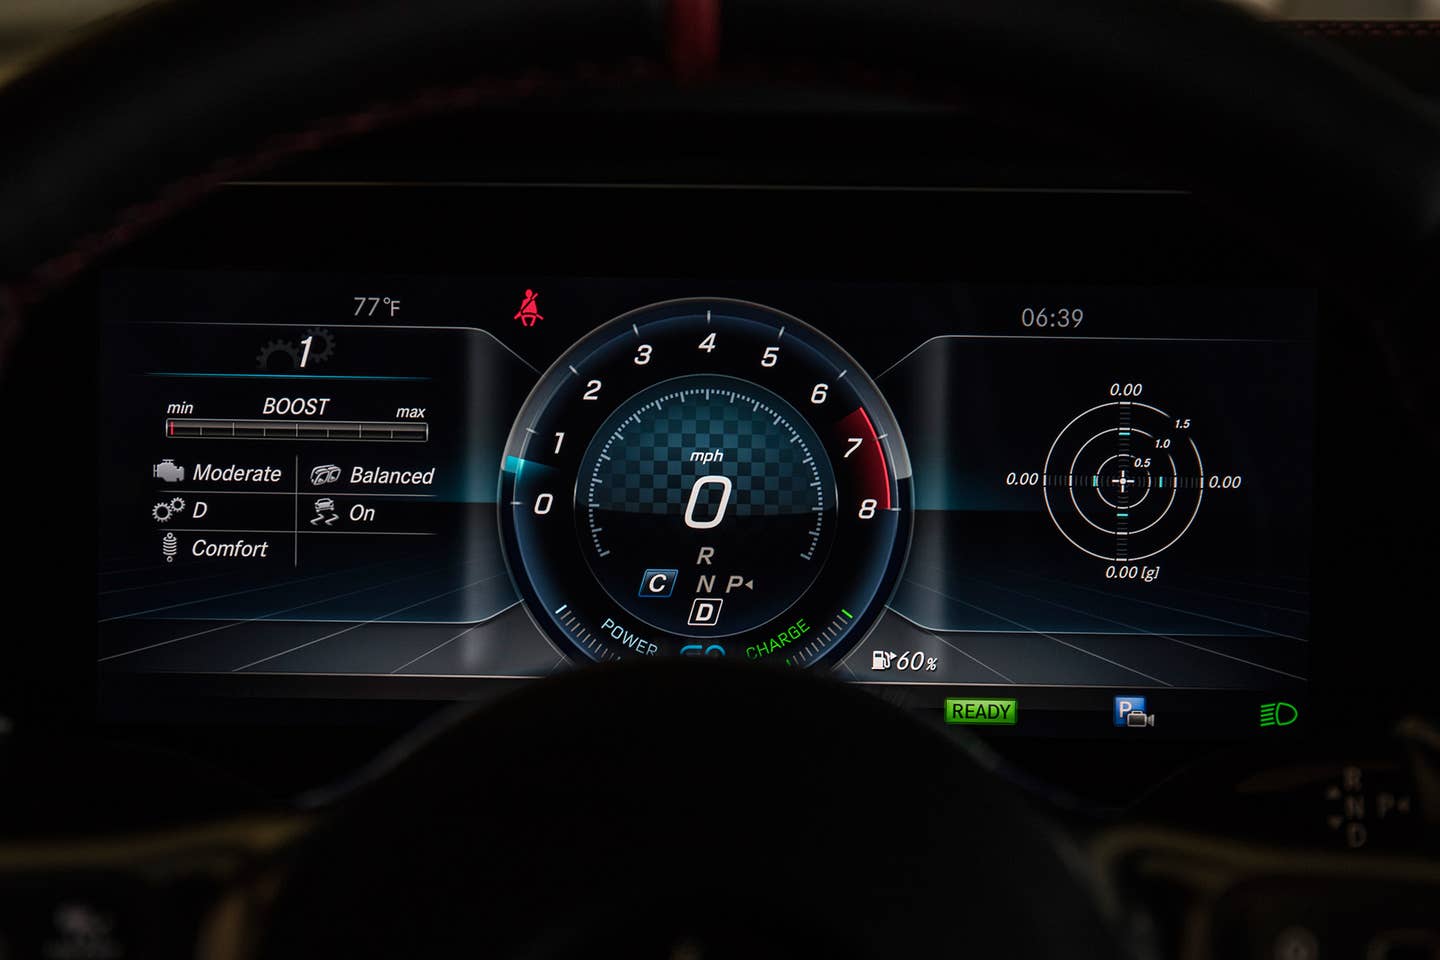 2019 mercedes-amg e53 coupe review gauges